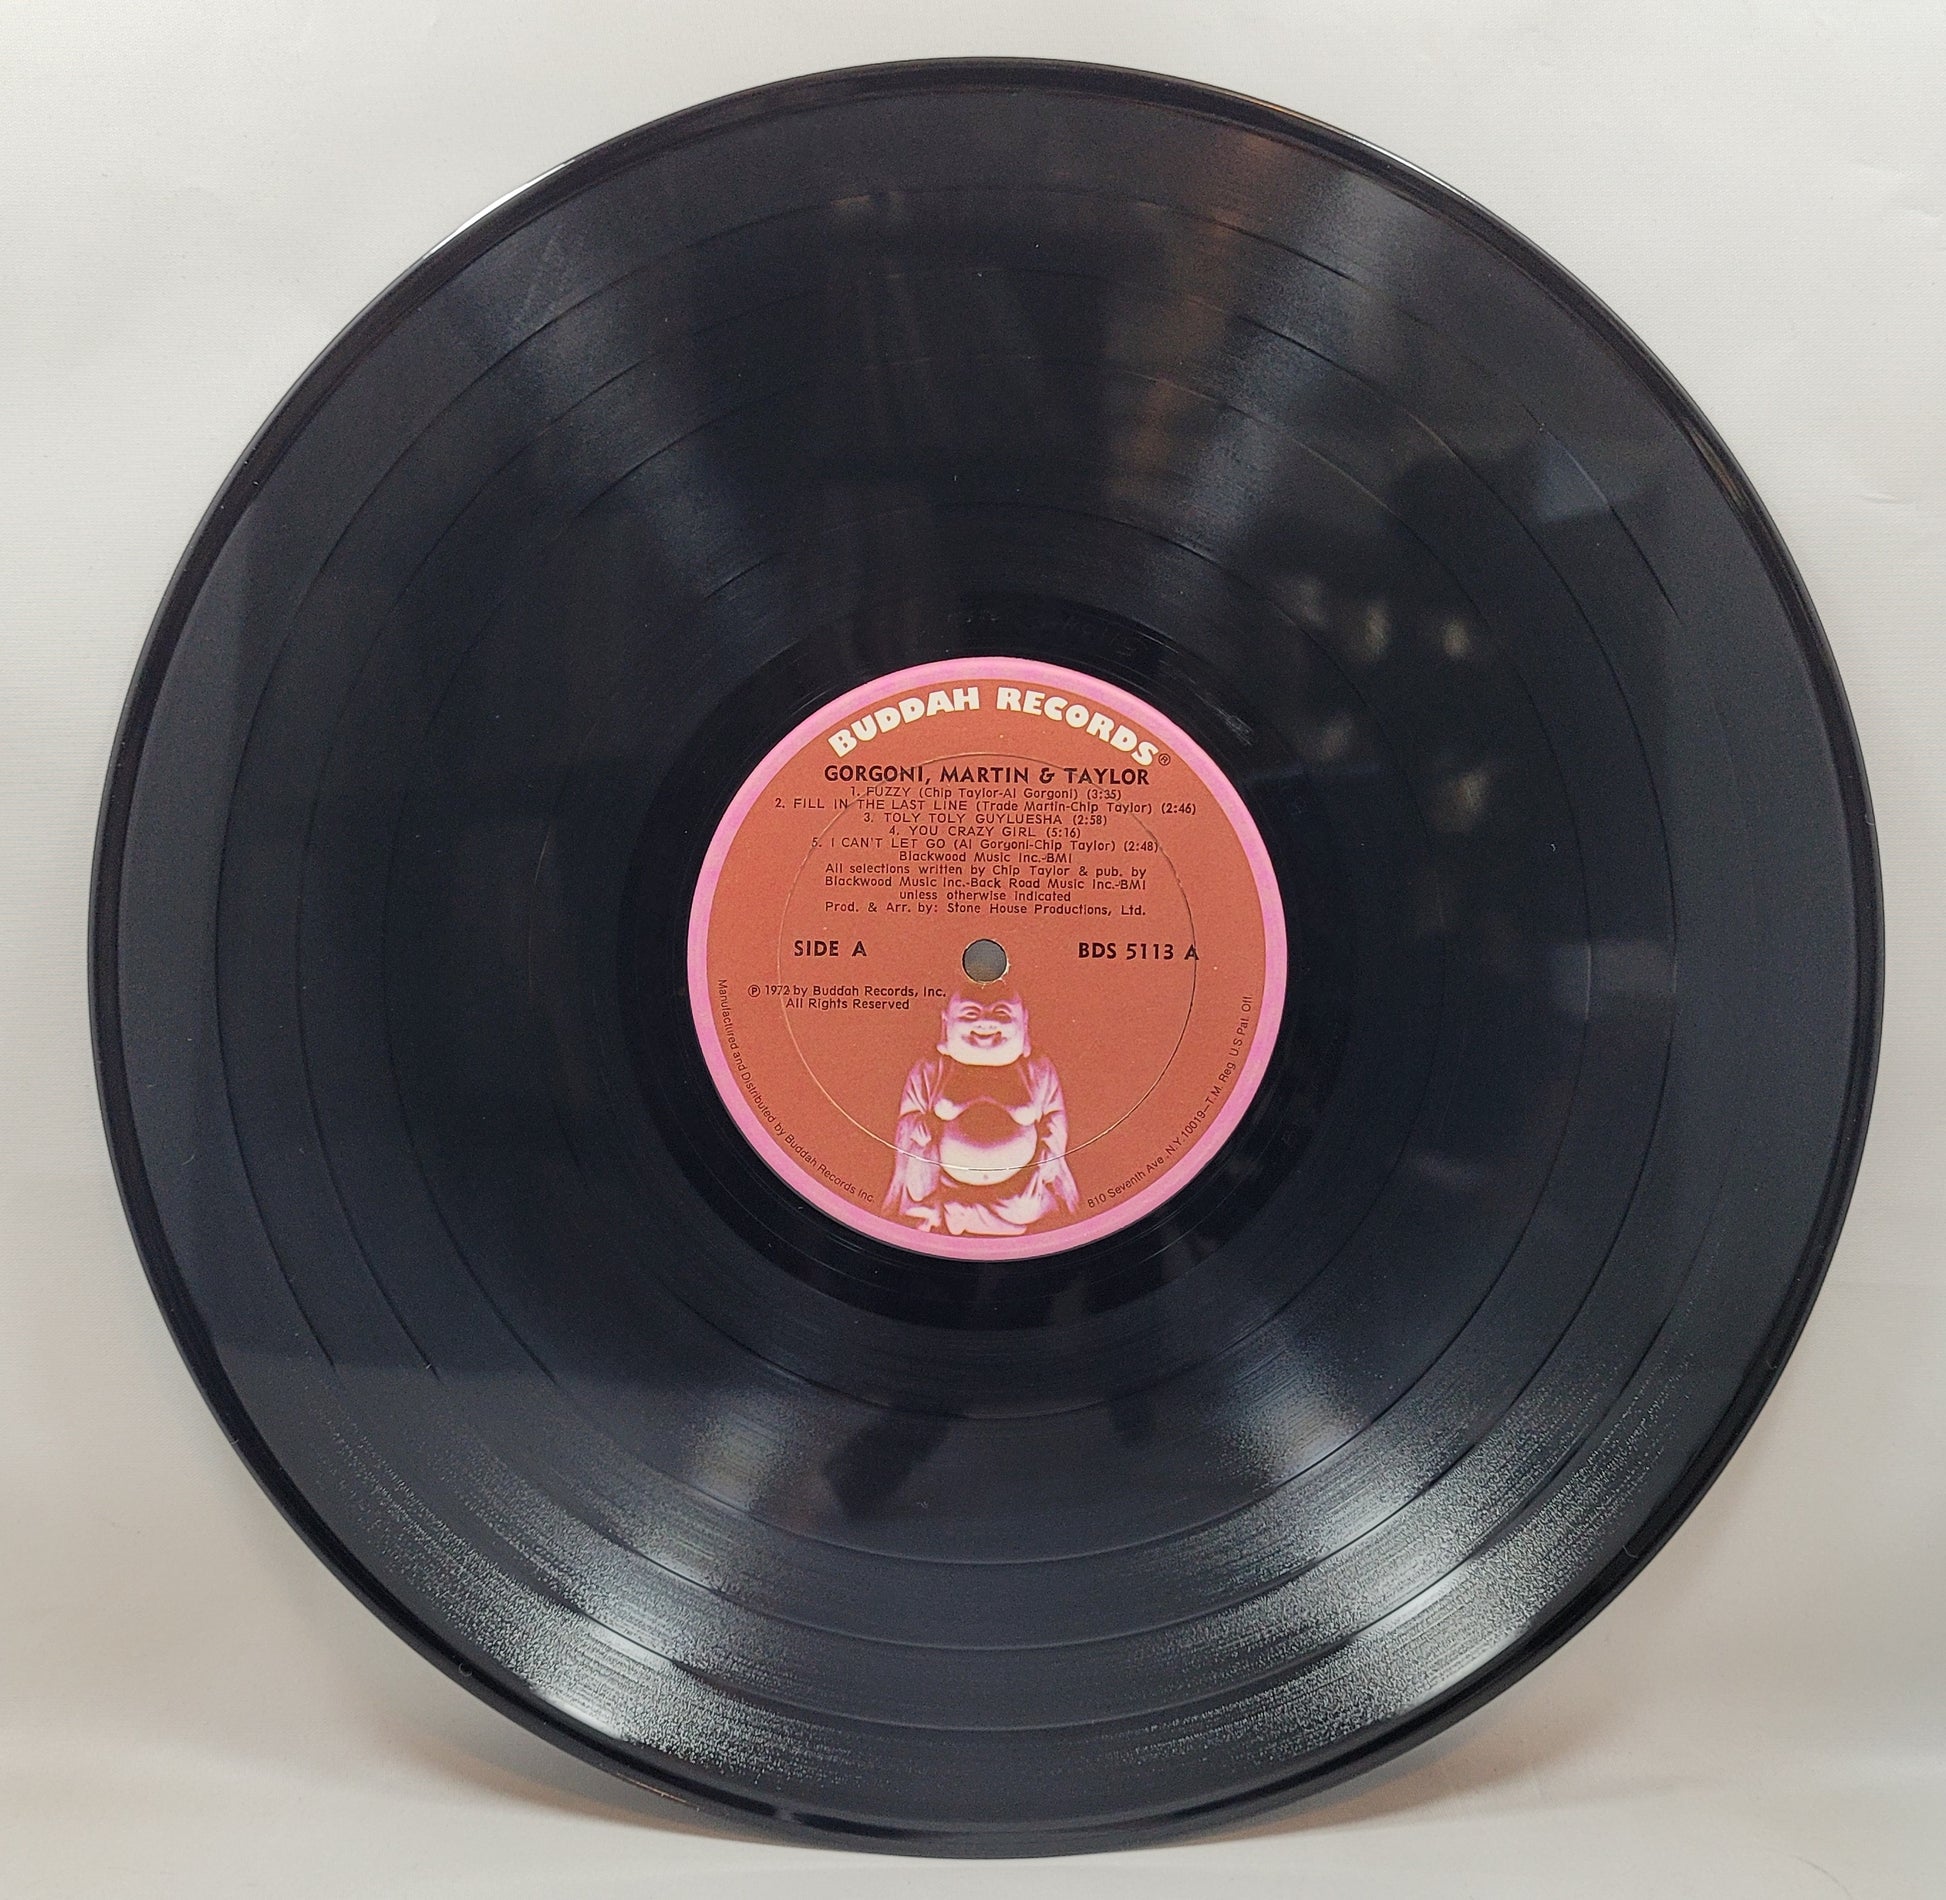 Gorgoni, Martin, Taylor - Gorgoni, Martin & Taylor [1972 Used Vinyl Record LP]